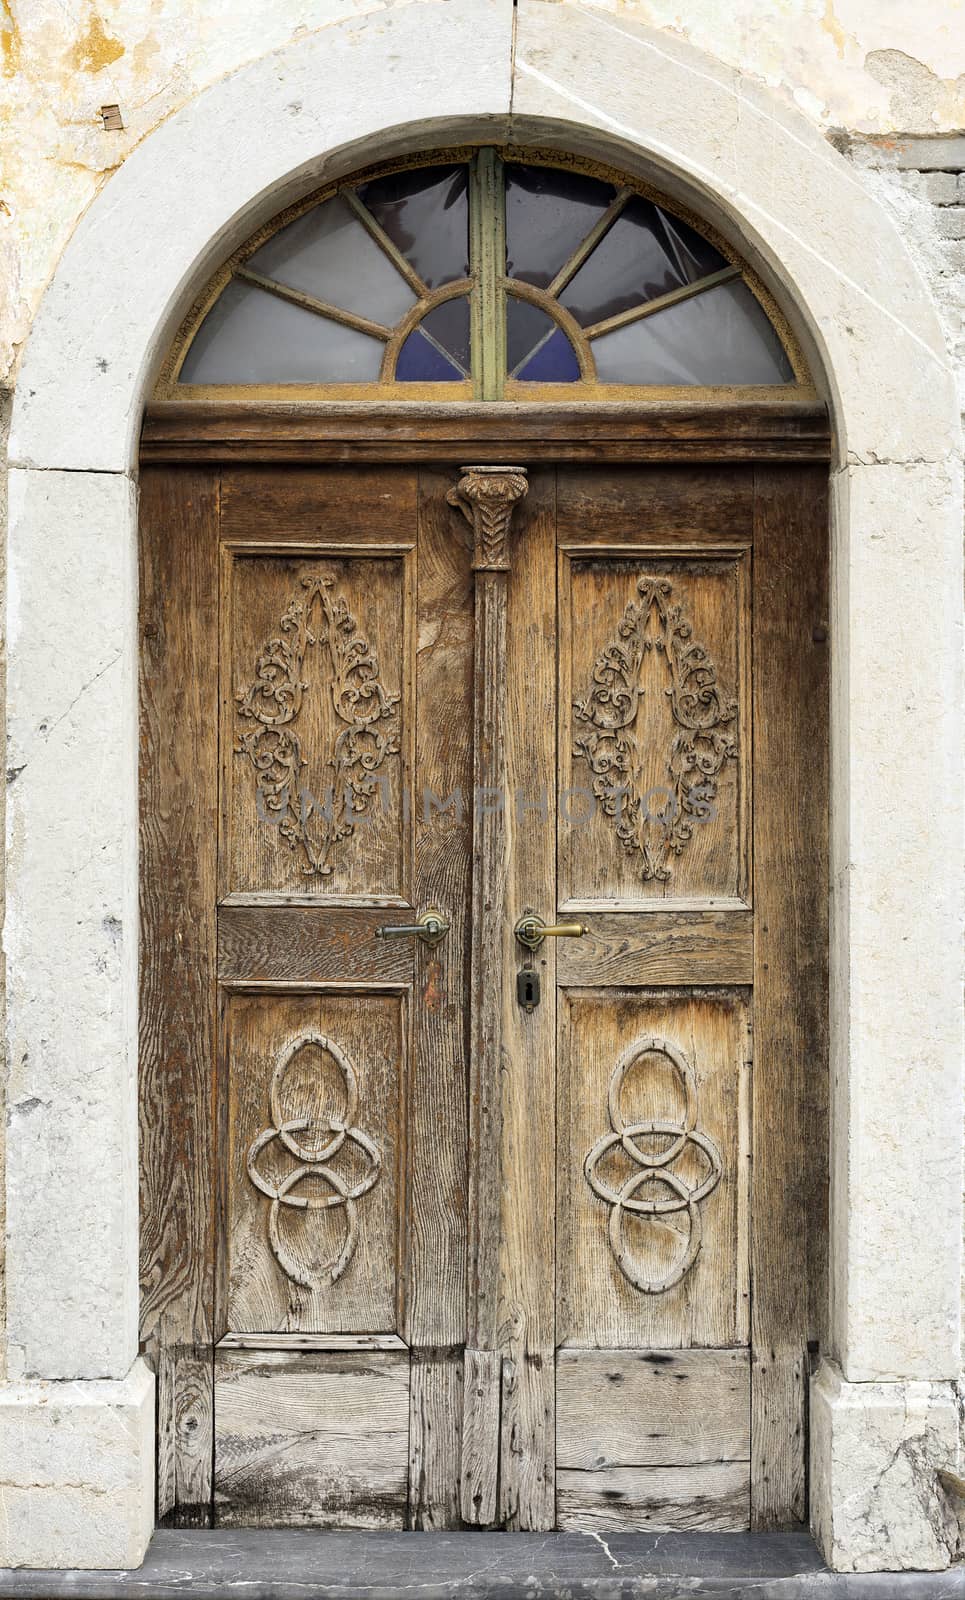 Carved wooden door  by photosampler